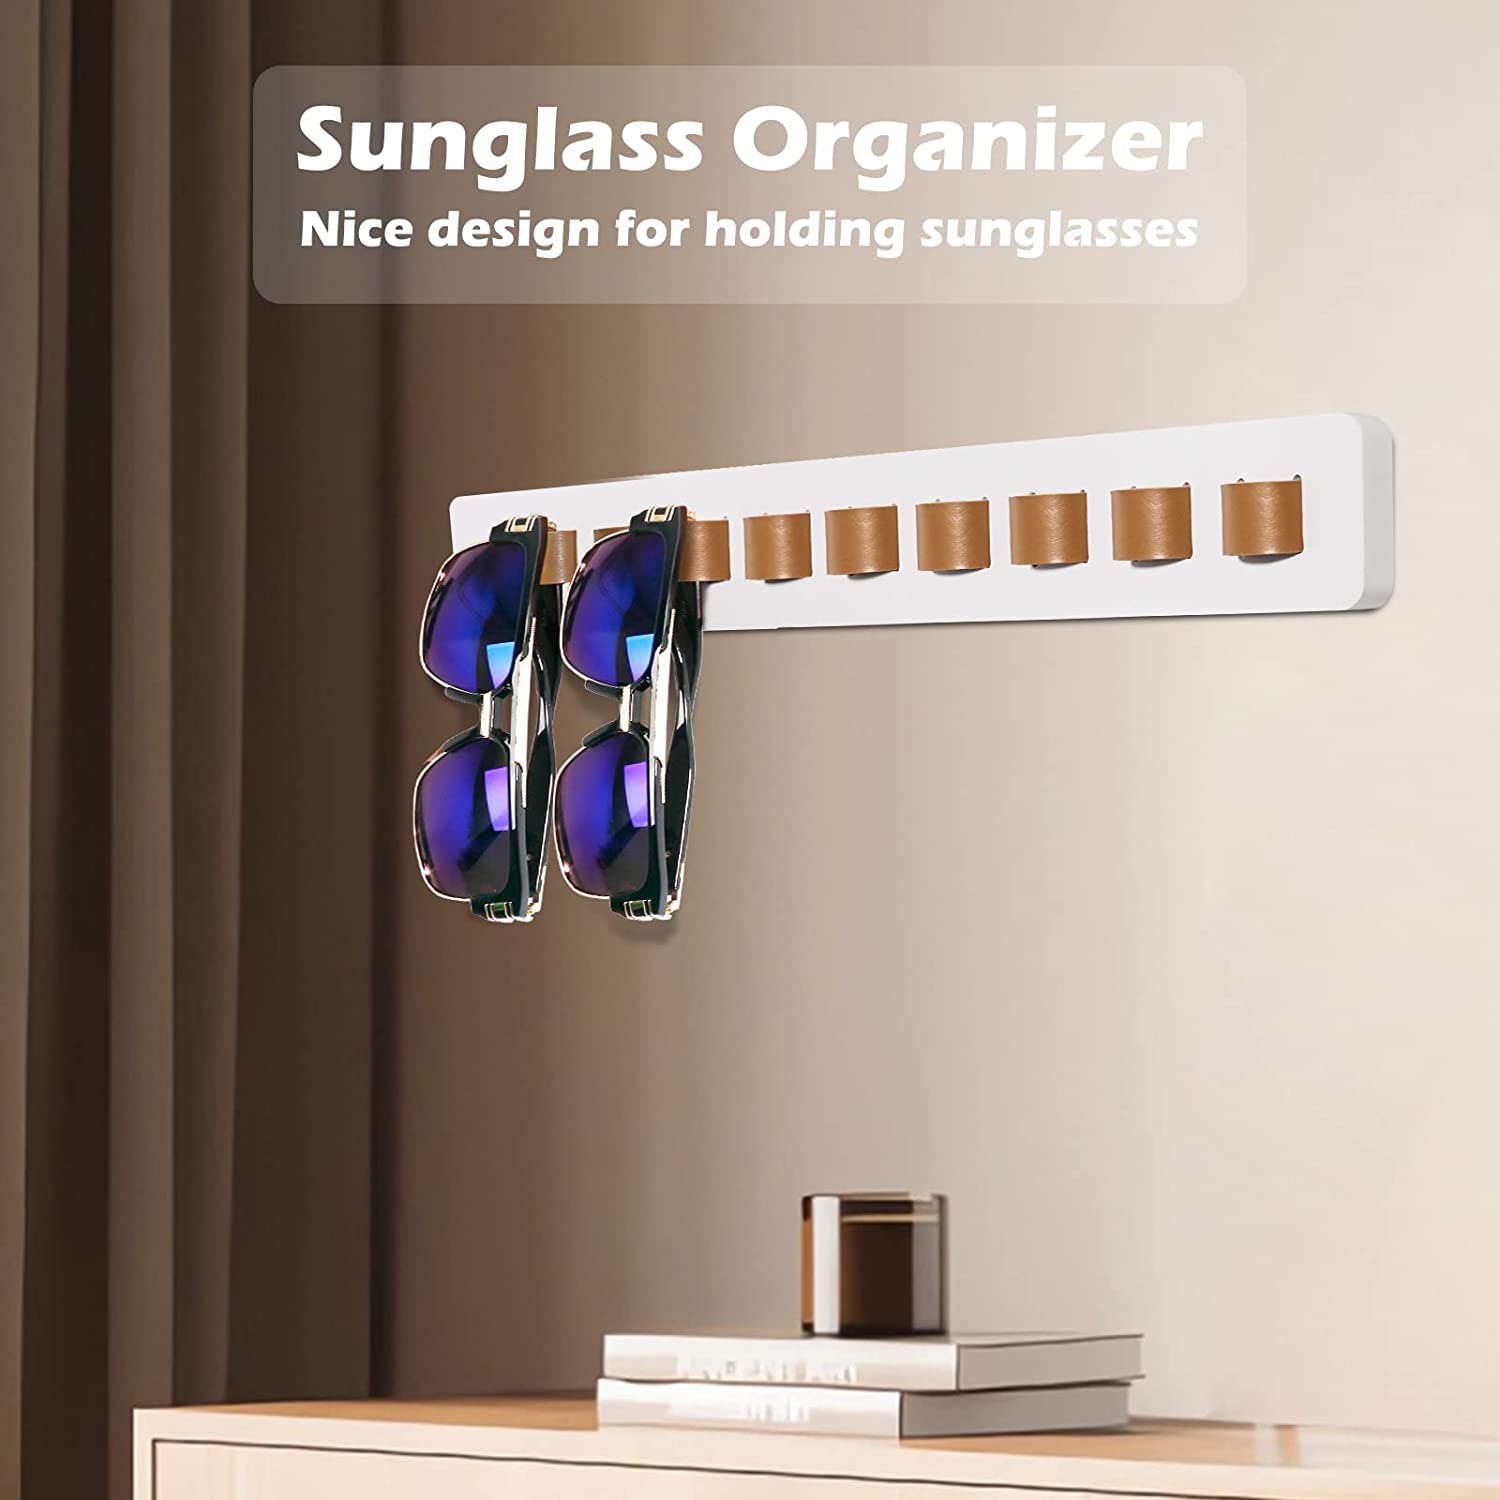 Sunglasses Organizer